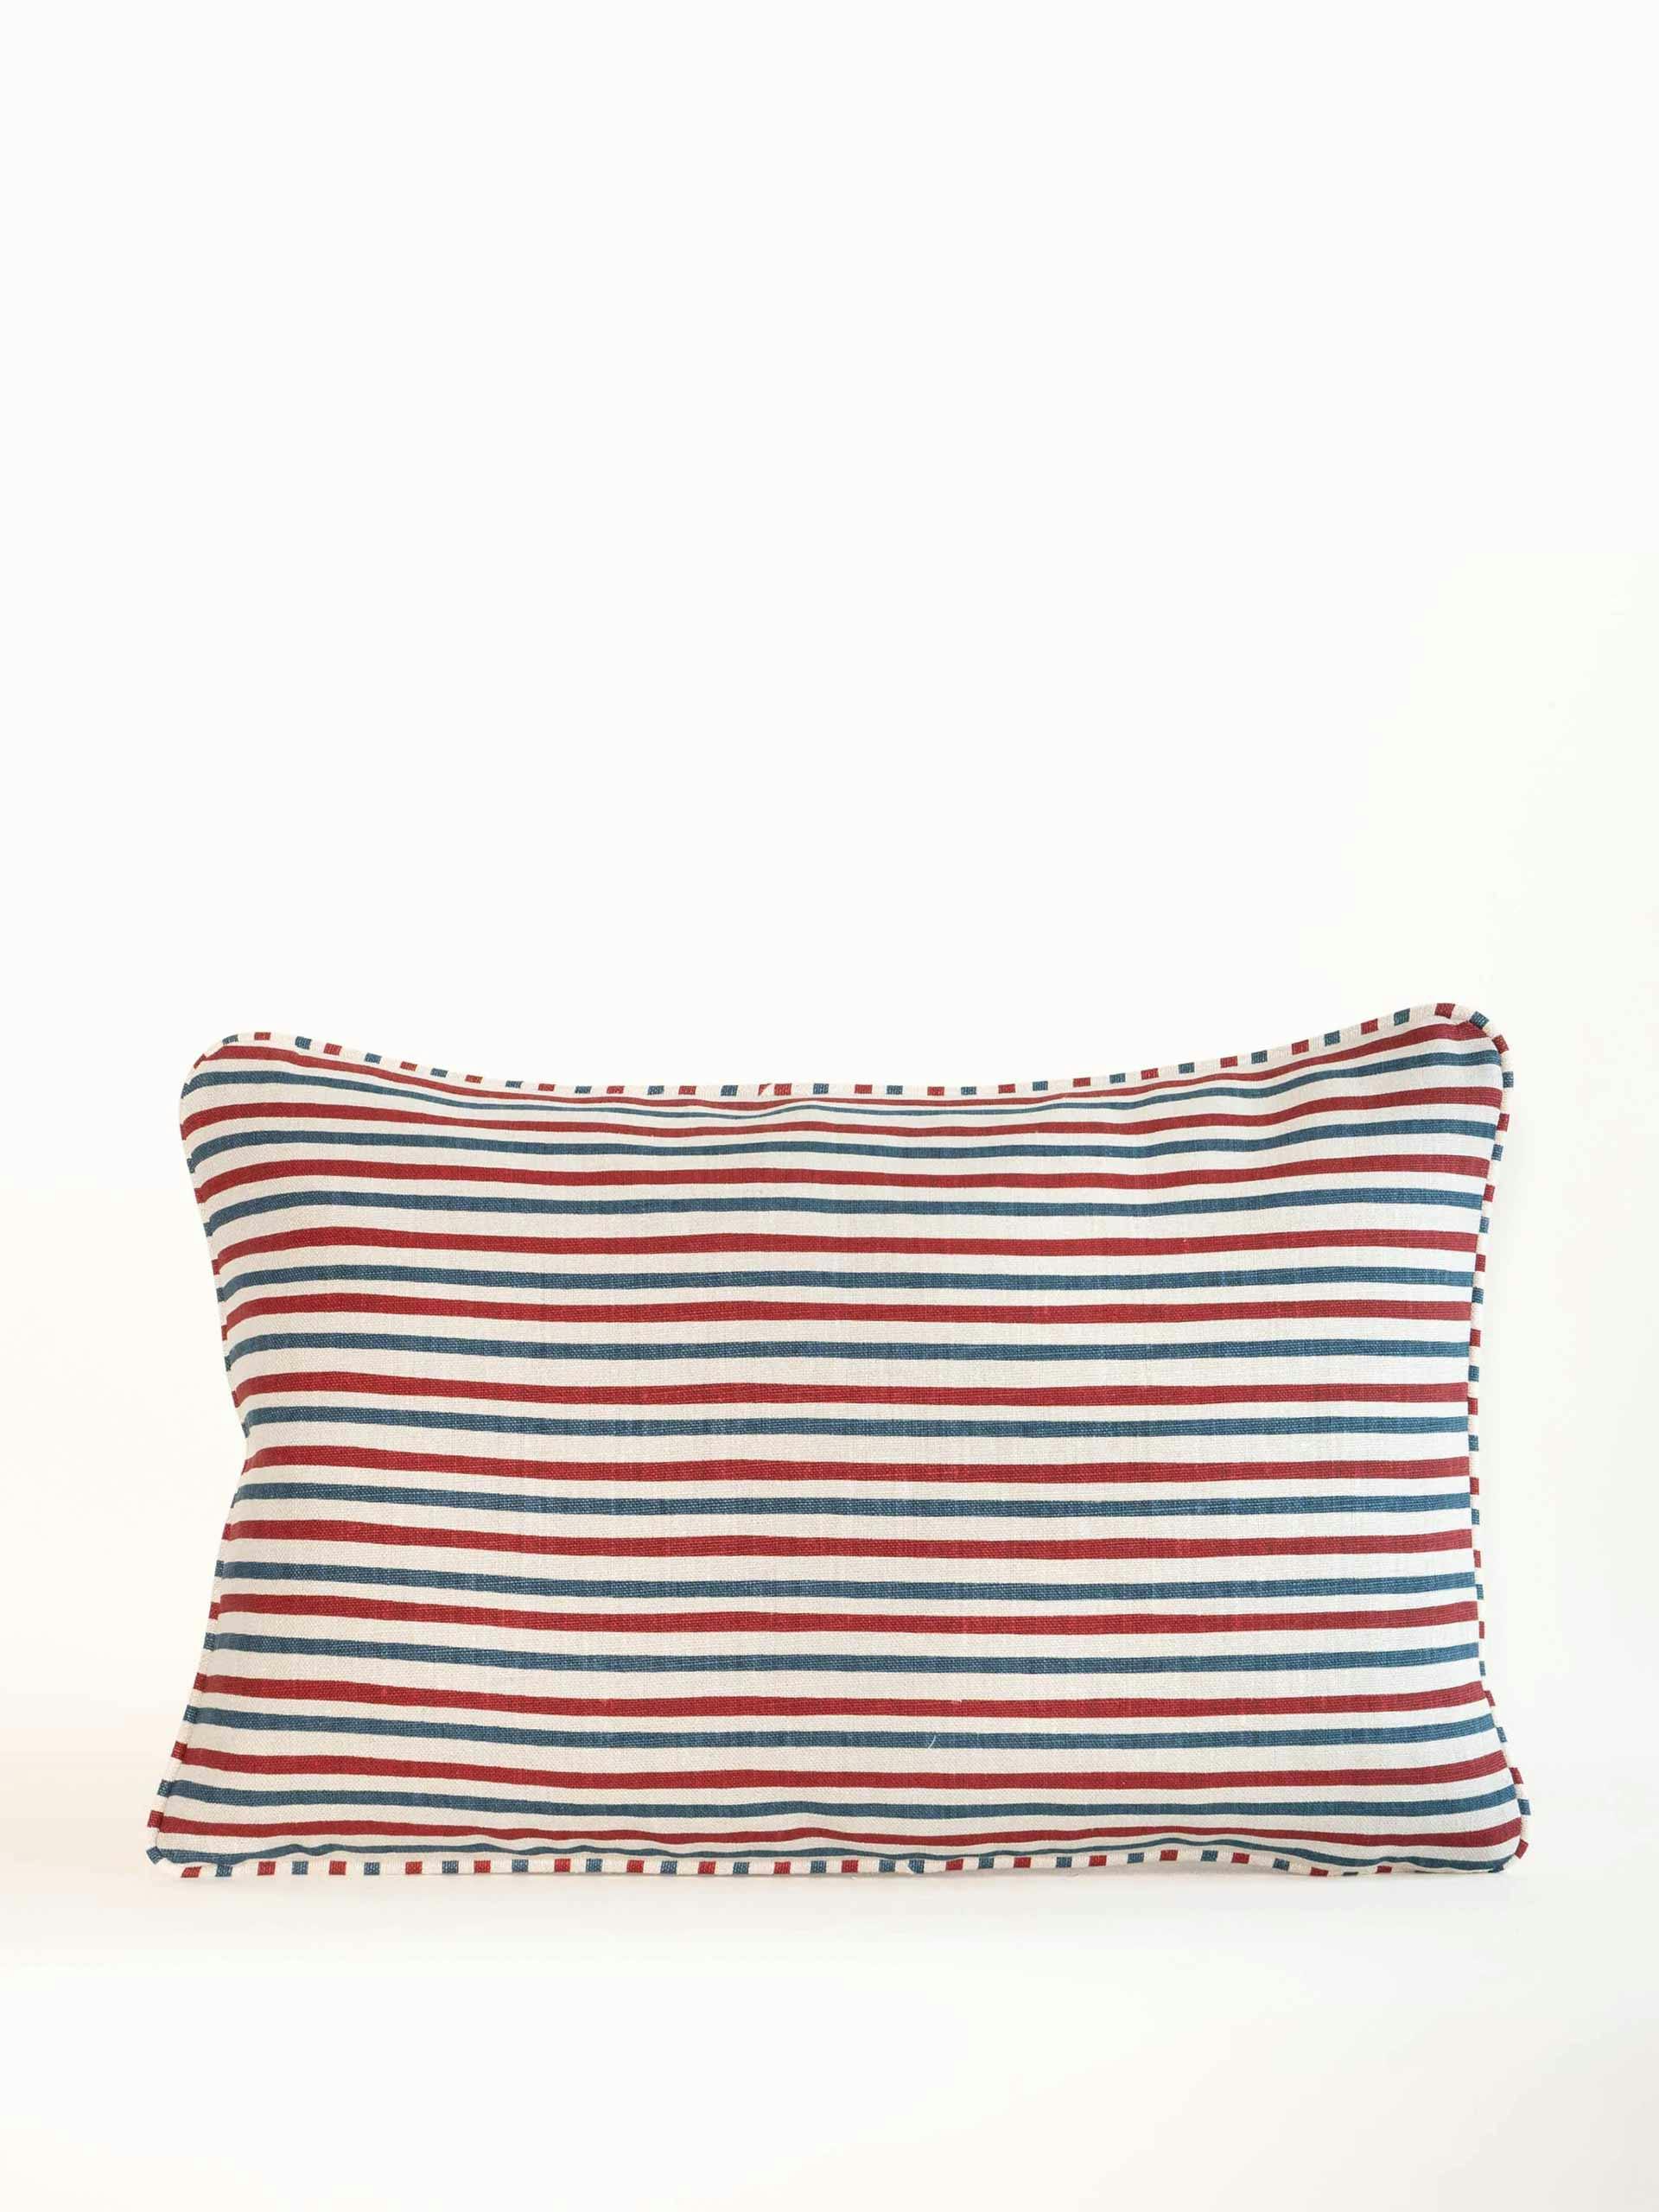 Anna-Lisa Bordeaux cushion cover long